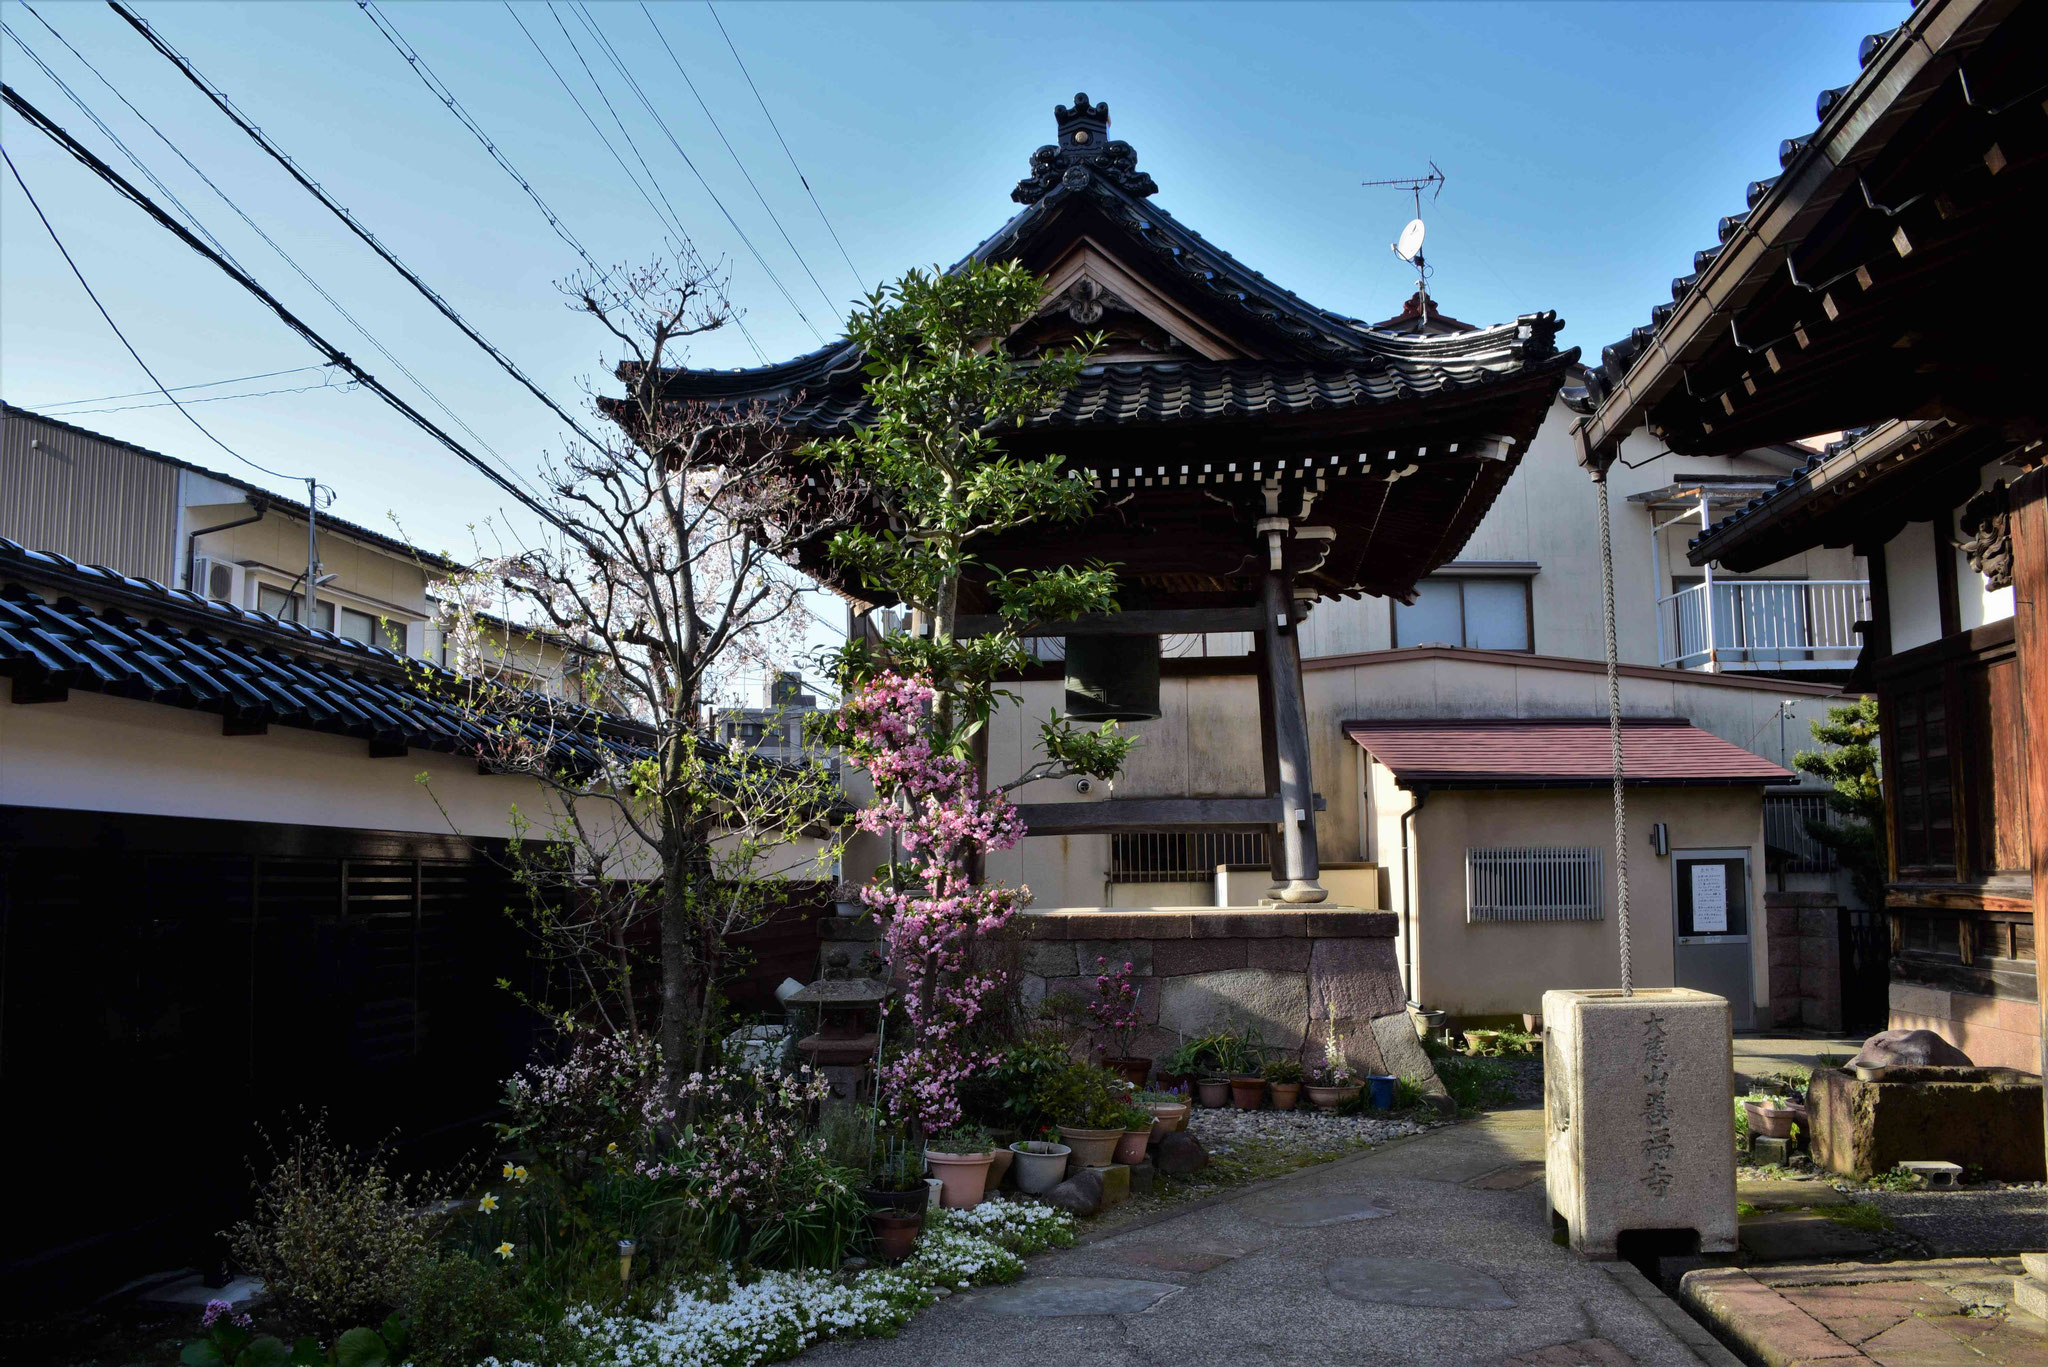 Zenpukuji-Tempel